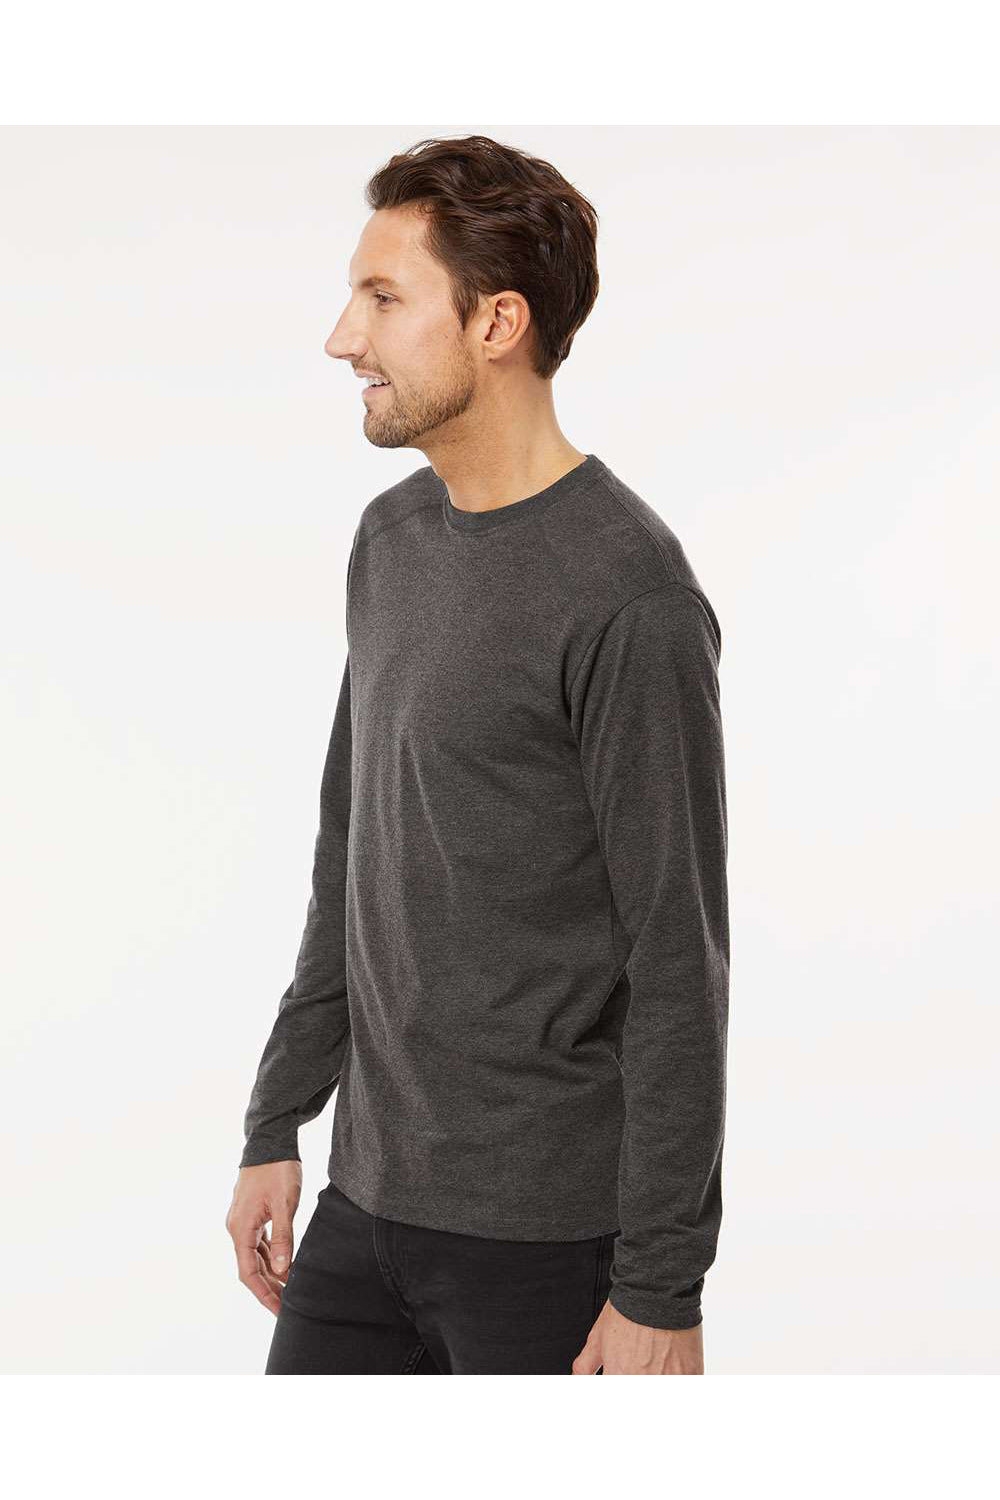 Kastlfel 2016 Mens RecycledSoft Long Sleeve Crewneck T-Shirt Carbon Grey Model Side